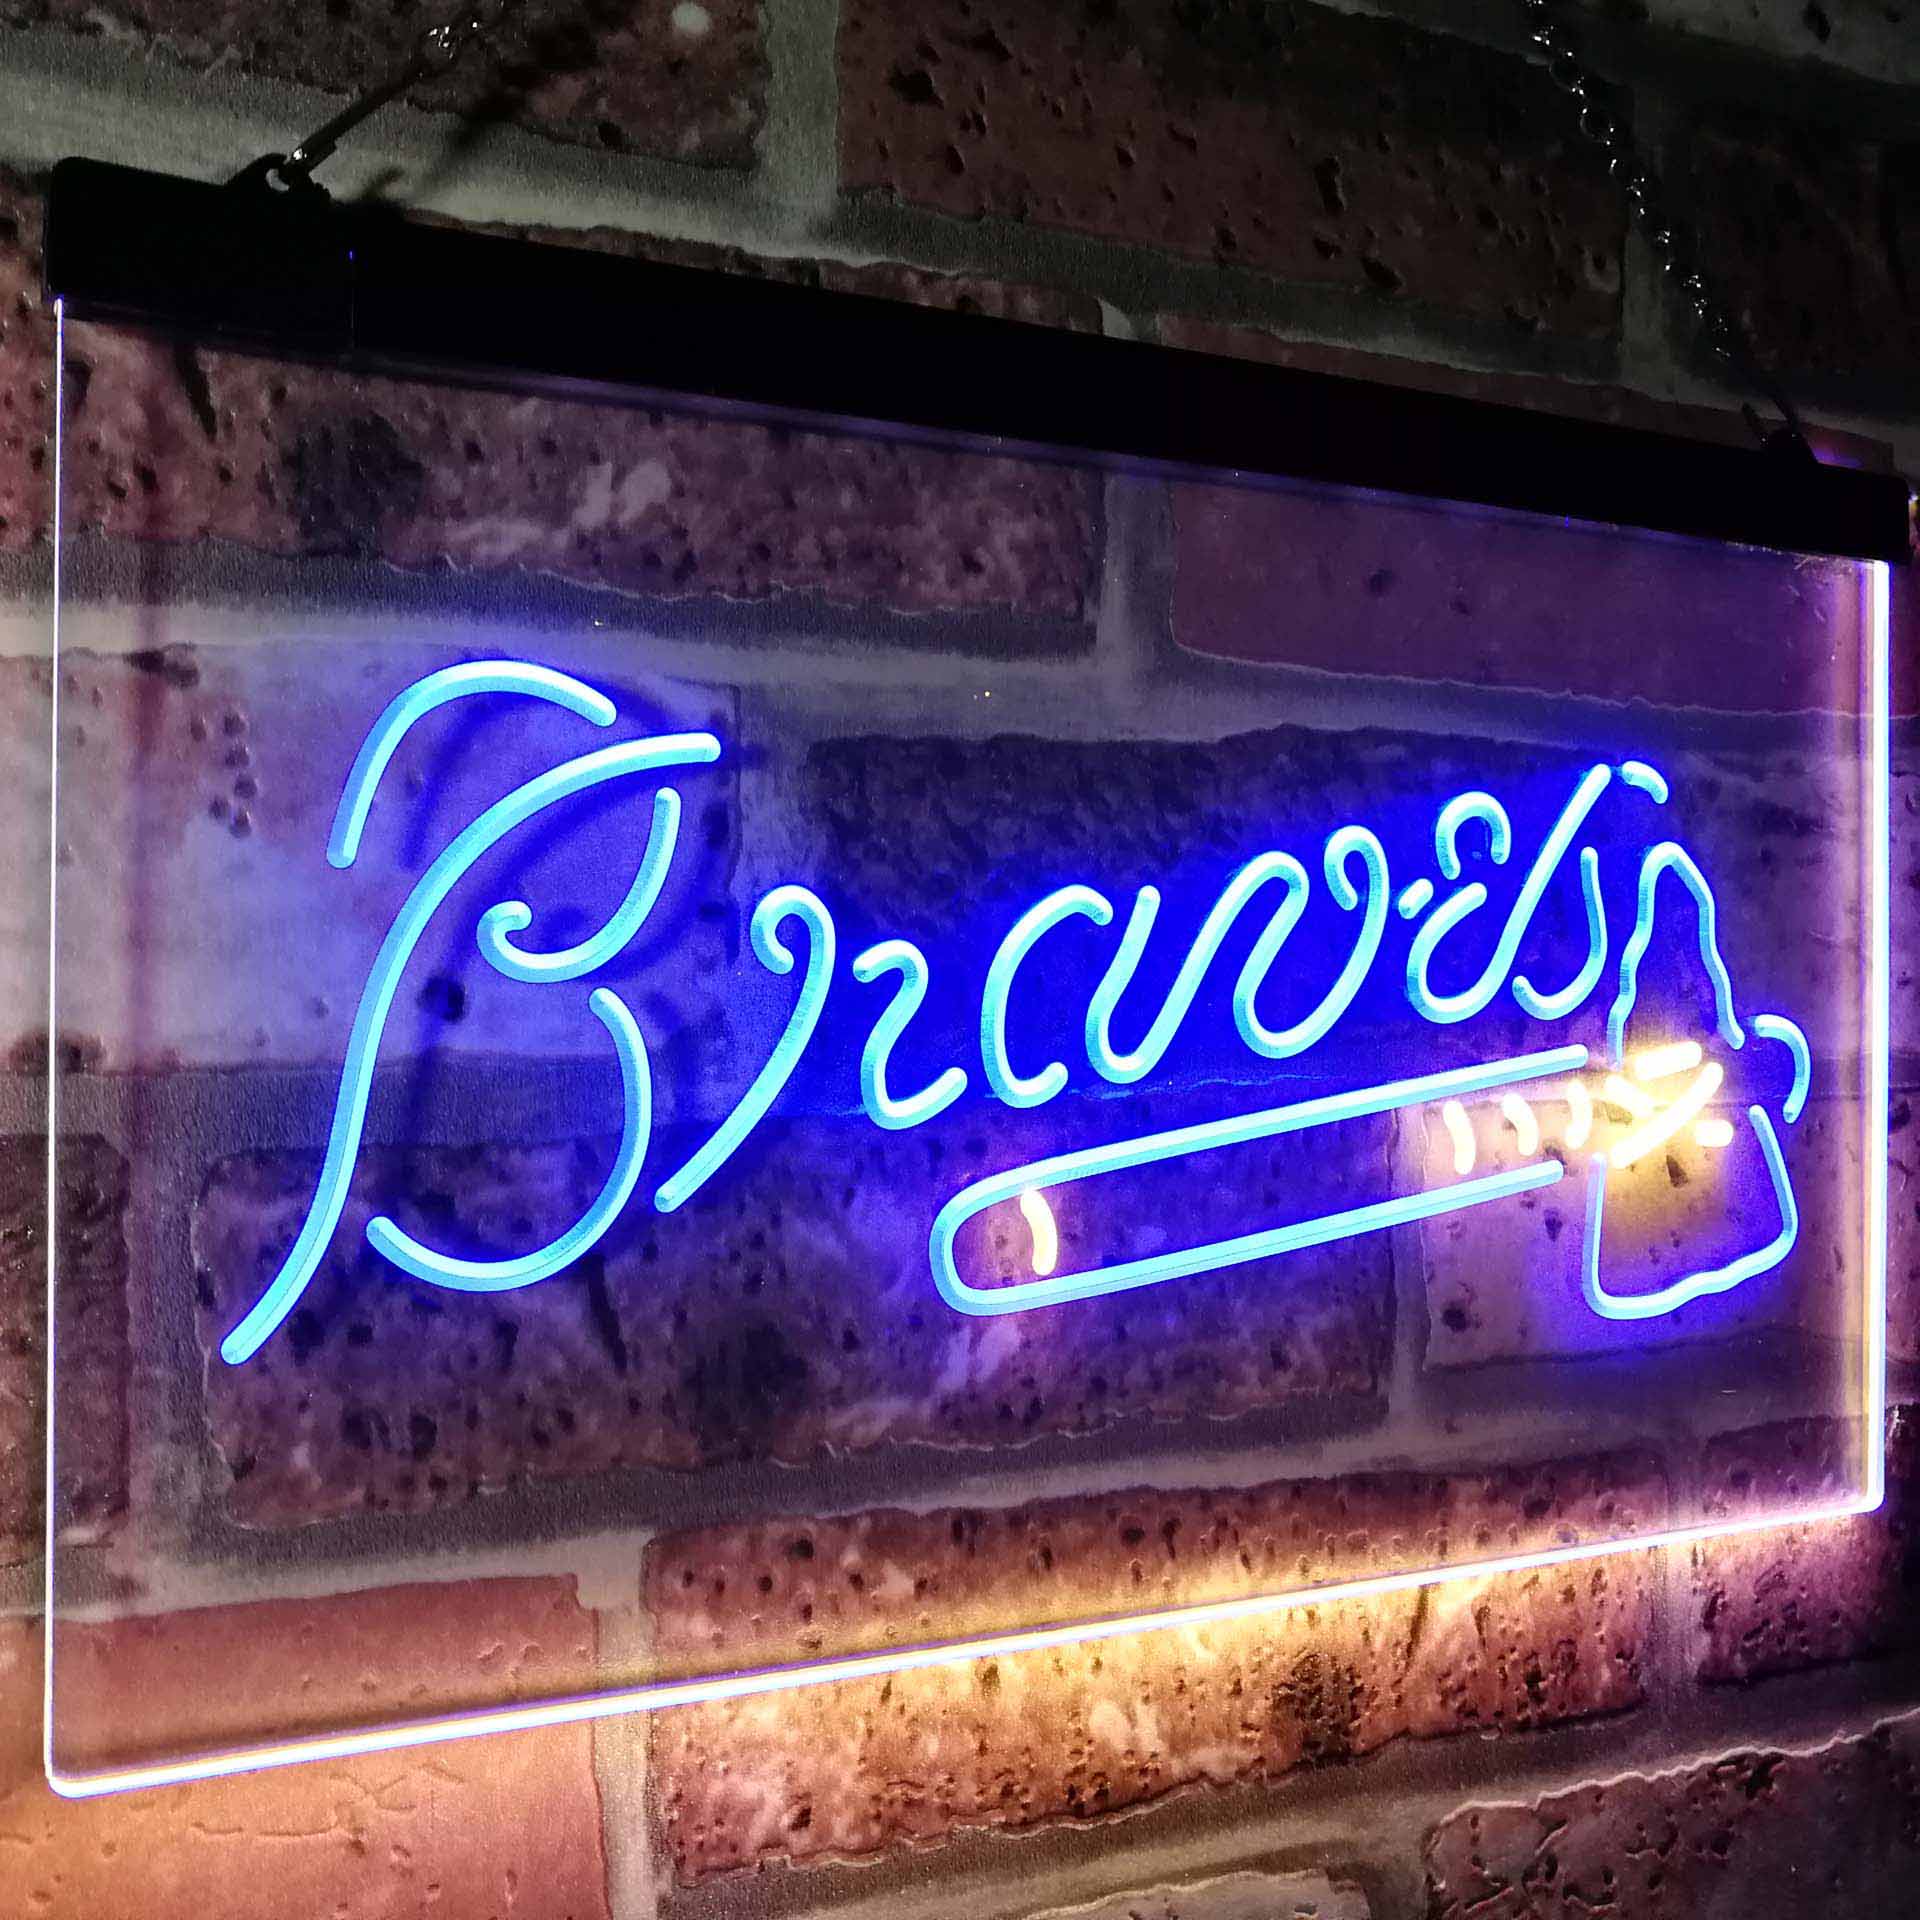 Atlanta Braves LED Neon Sign